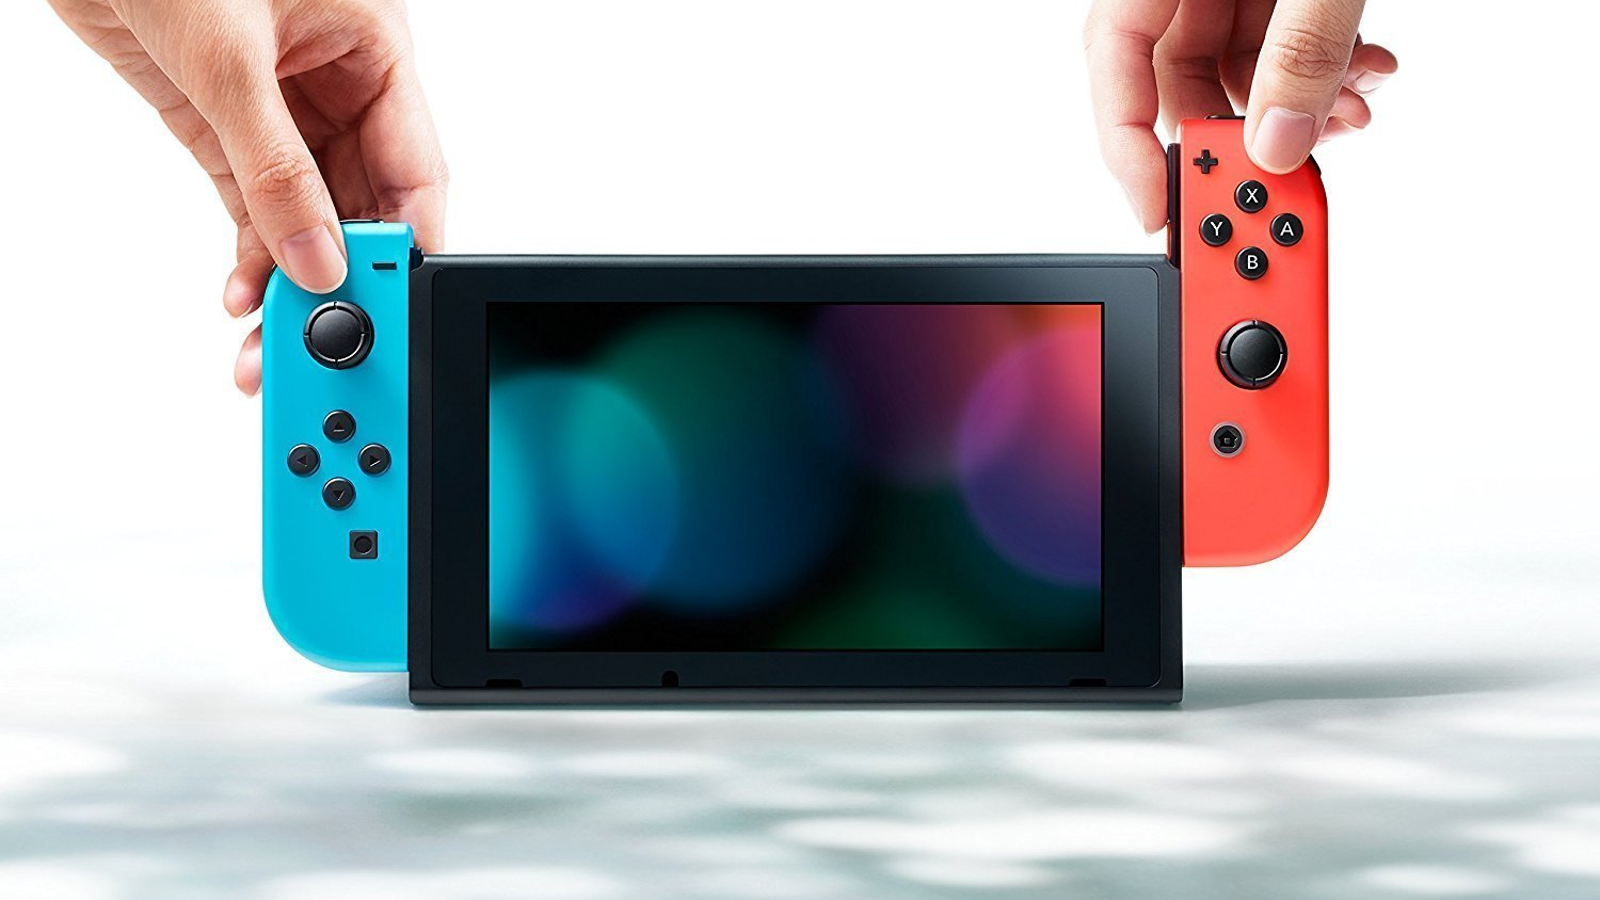 Nintendo drops base model Switch price in Europe